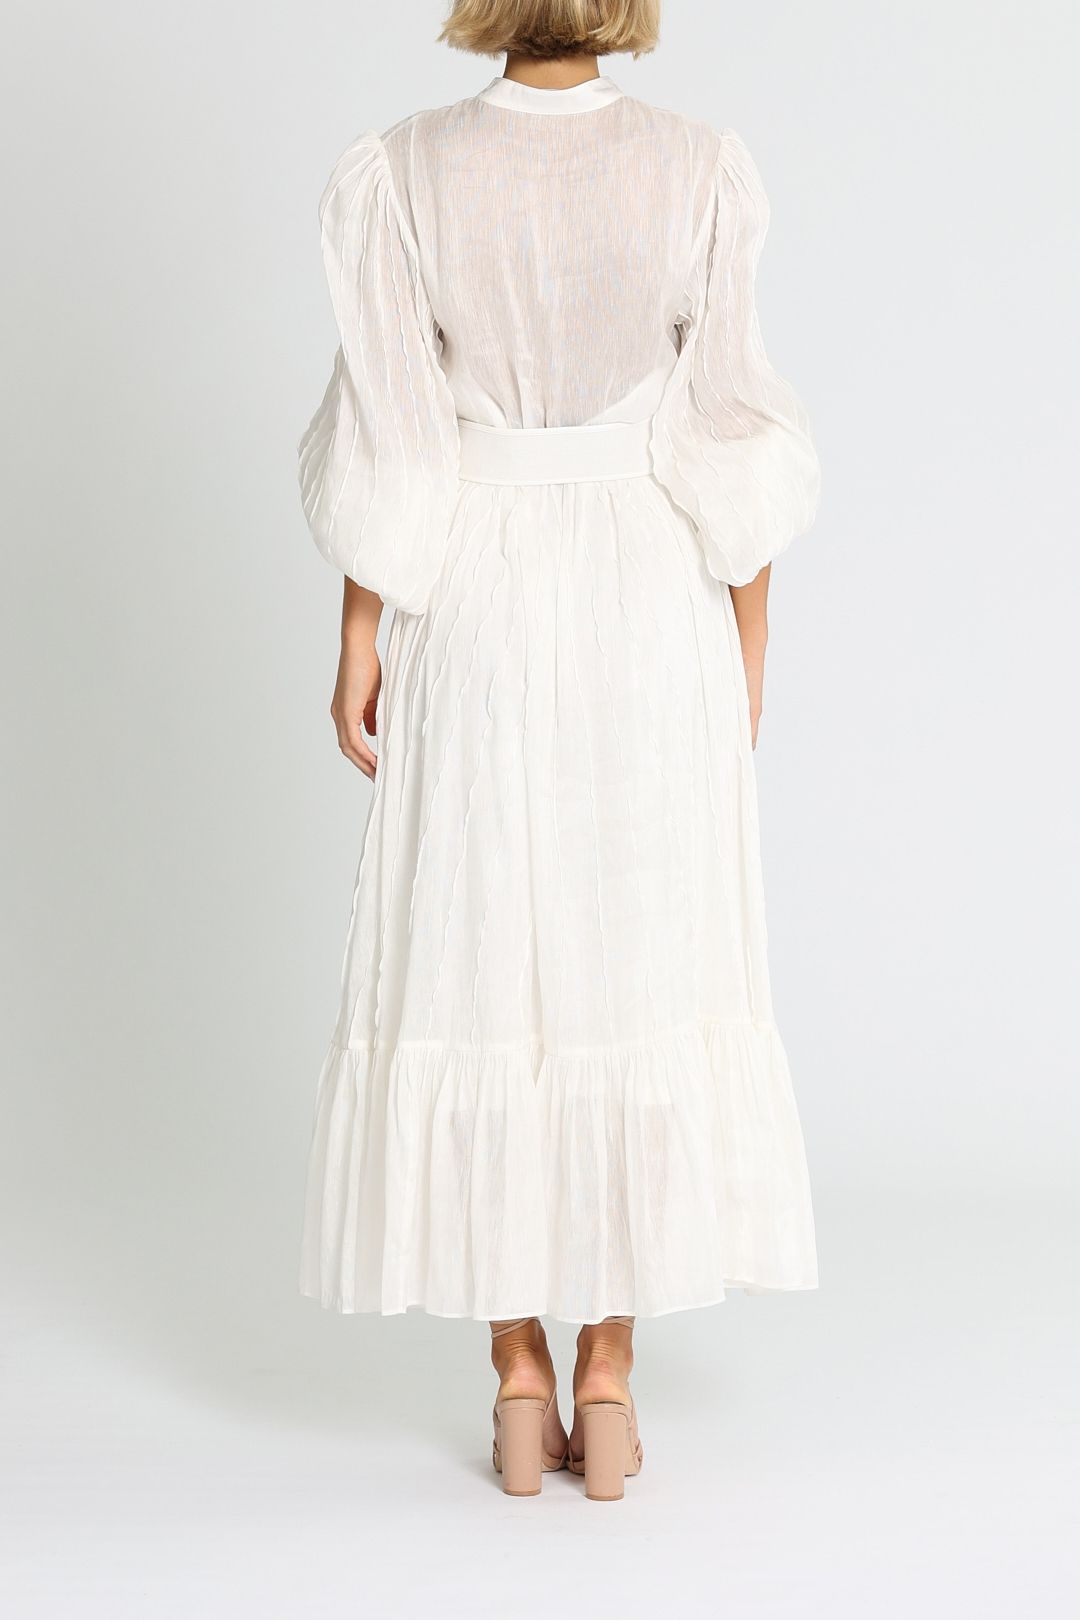 LEO LIN Cambridge Dress White Blouson Sleeves